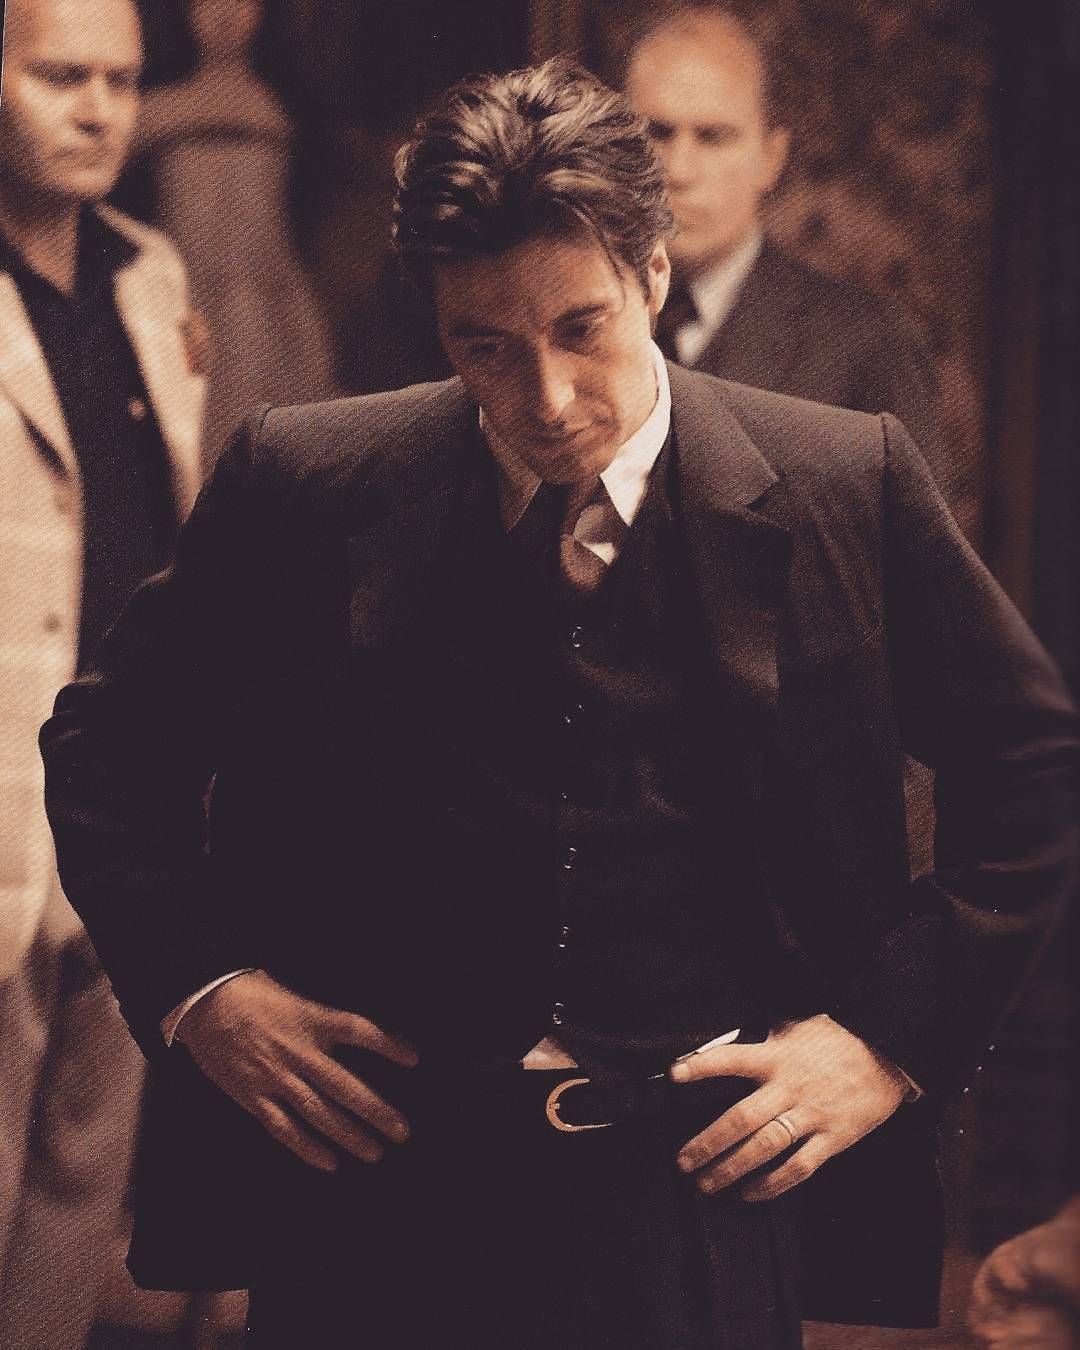 Al Pacino in The Godfather II (1974). Young al pacino, Al pacino, Godfather movie